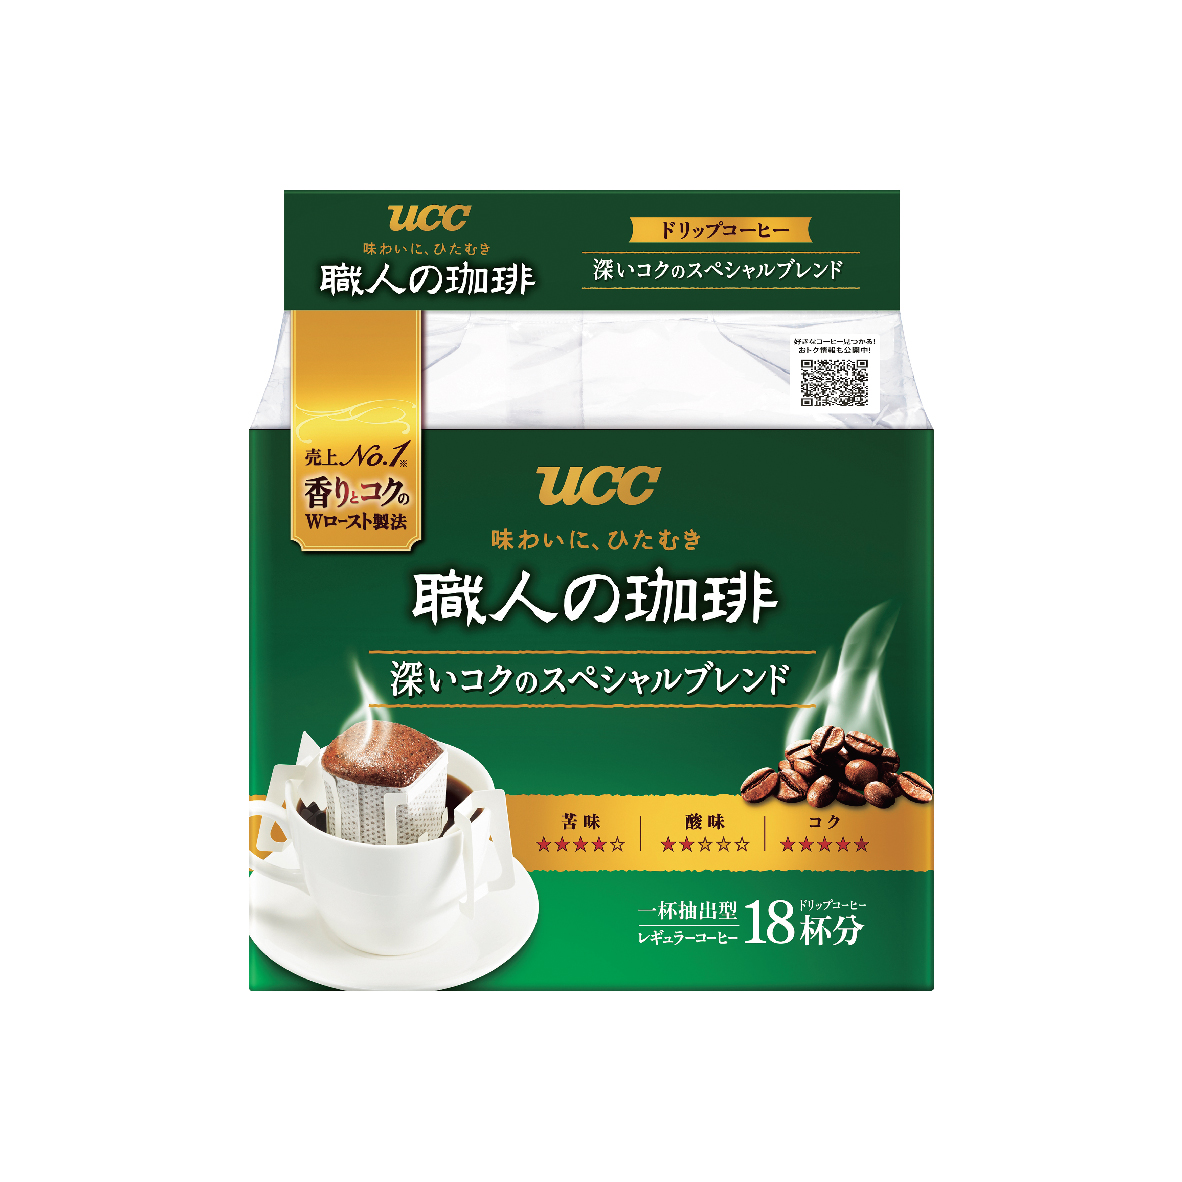 UCC Craftsman’s Coffee Rich Drip Coffee